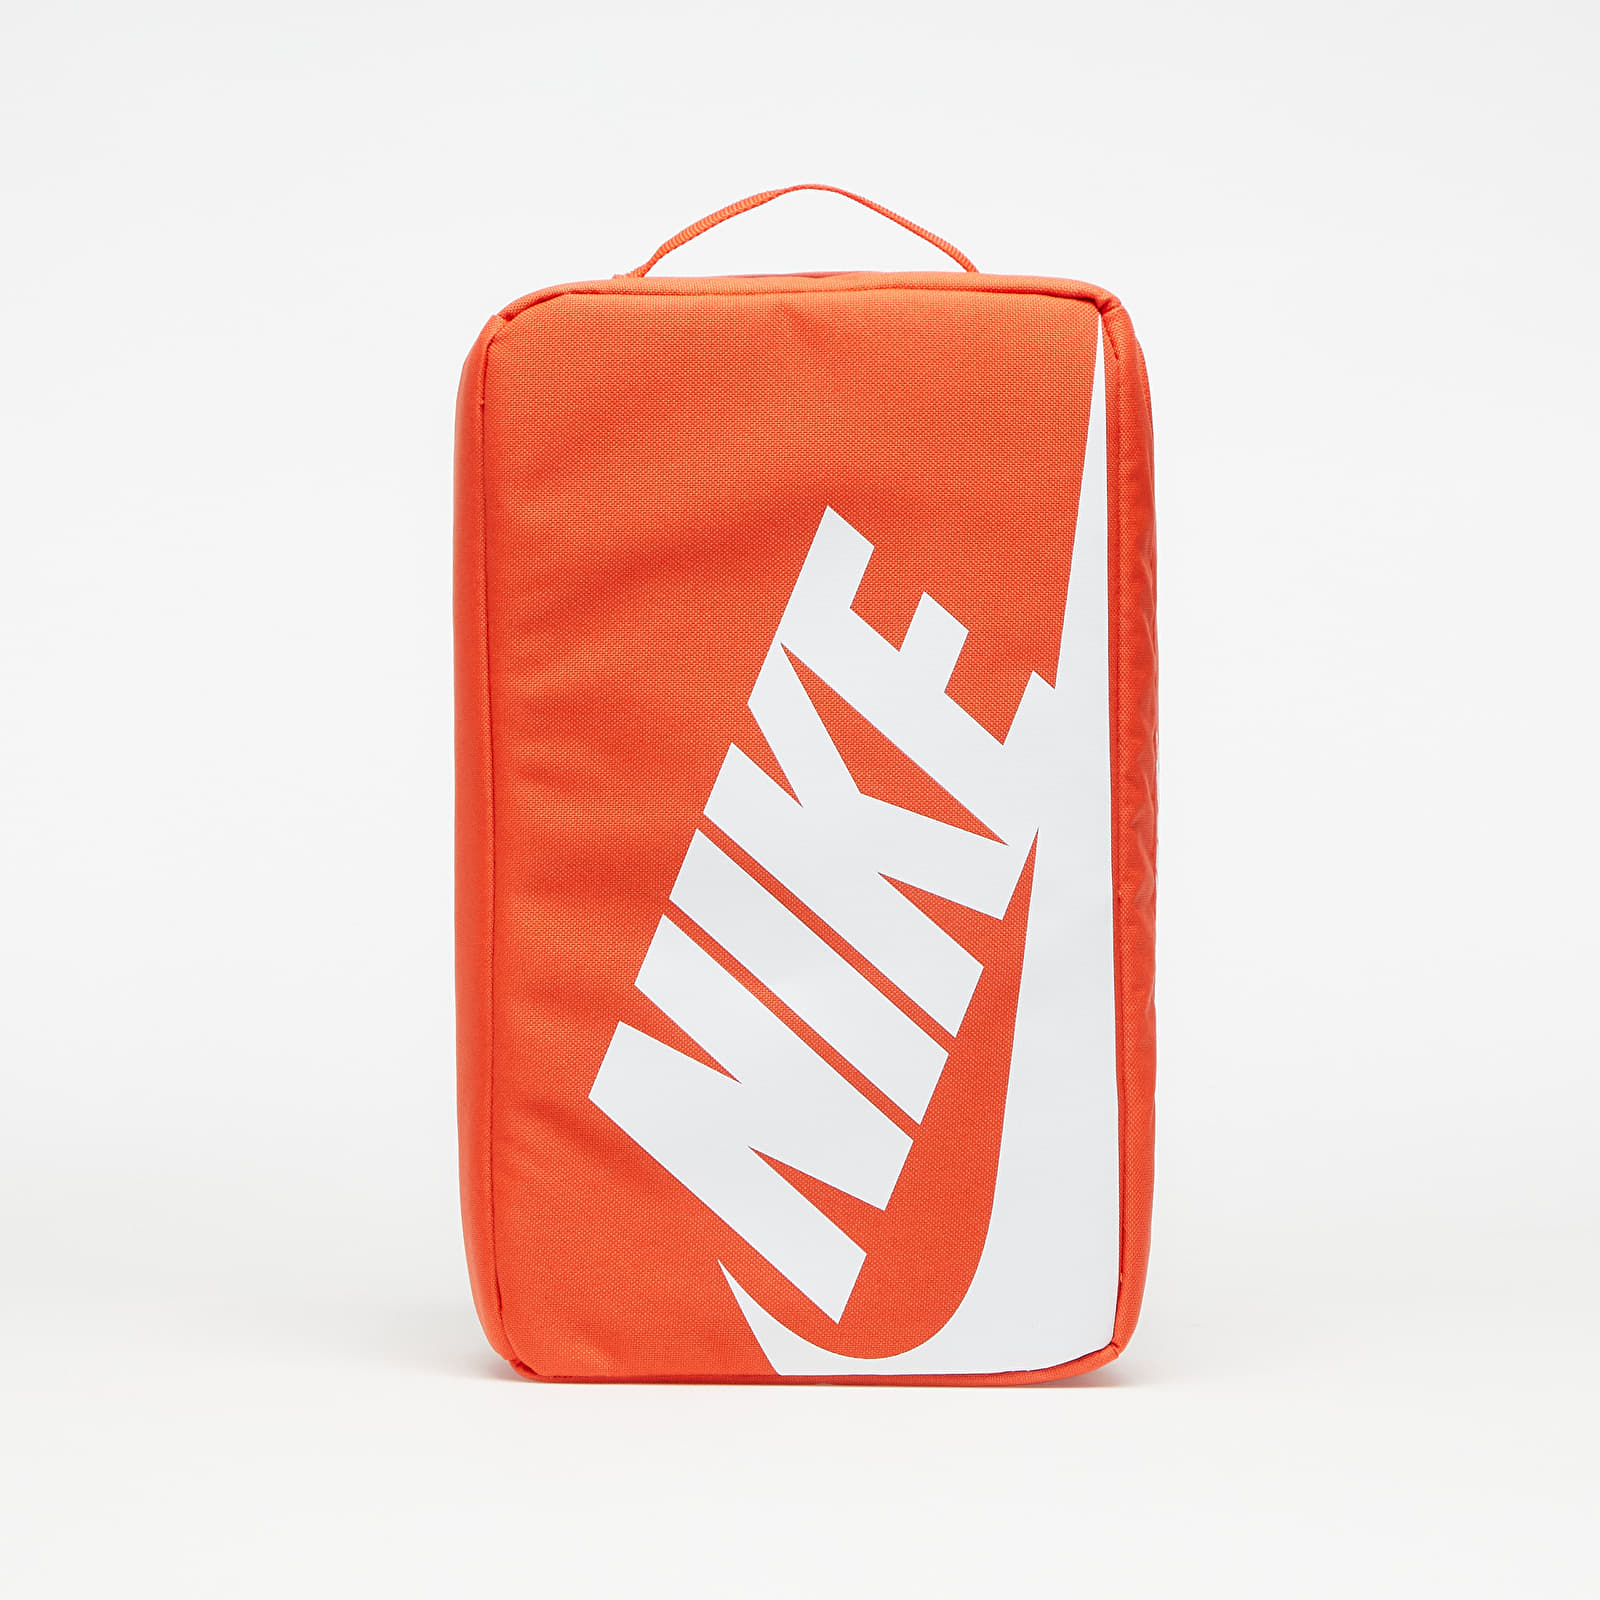 Genți și Rucsacuri Nike Shoe Box Bag Orange/ Orange/ White